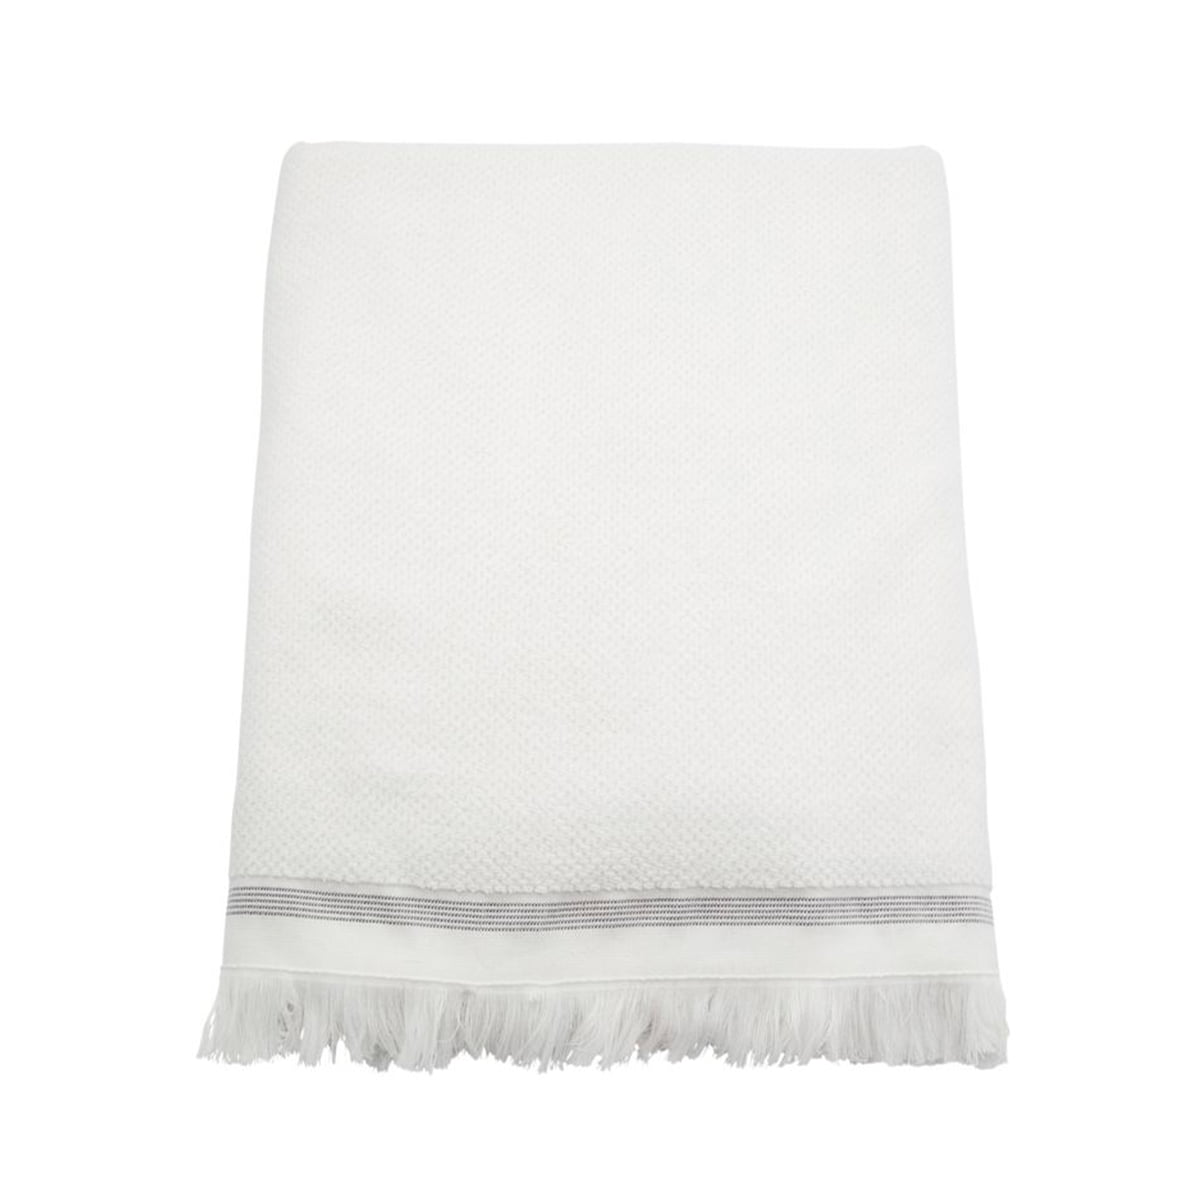 meraki - serviette de bain rayée, 100 x 180 cm, blanc / gris